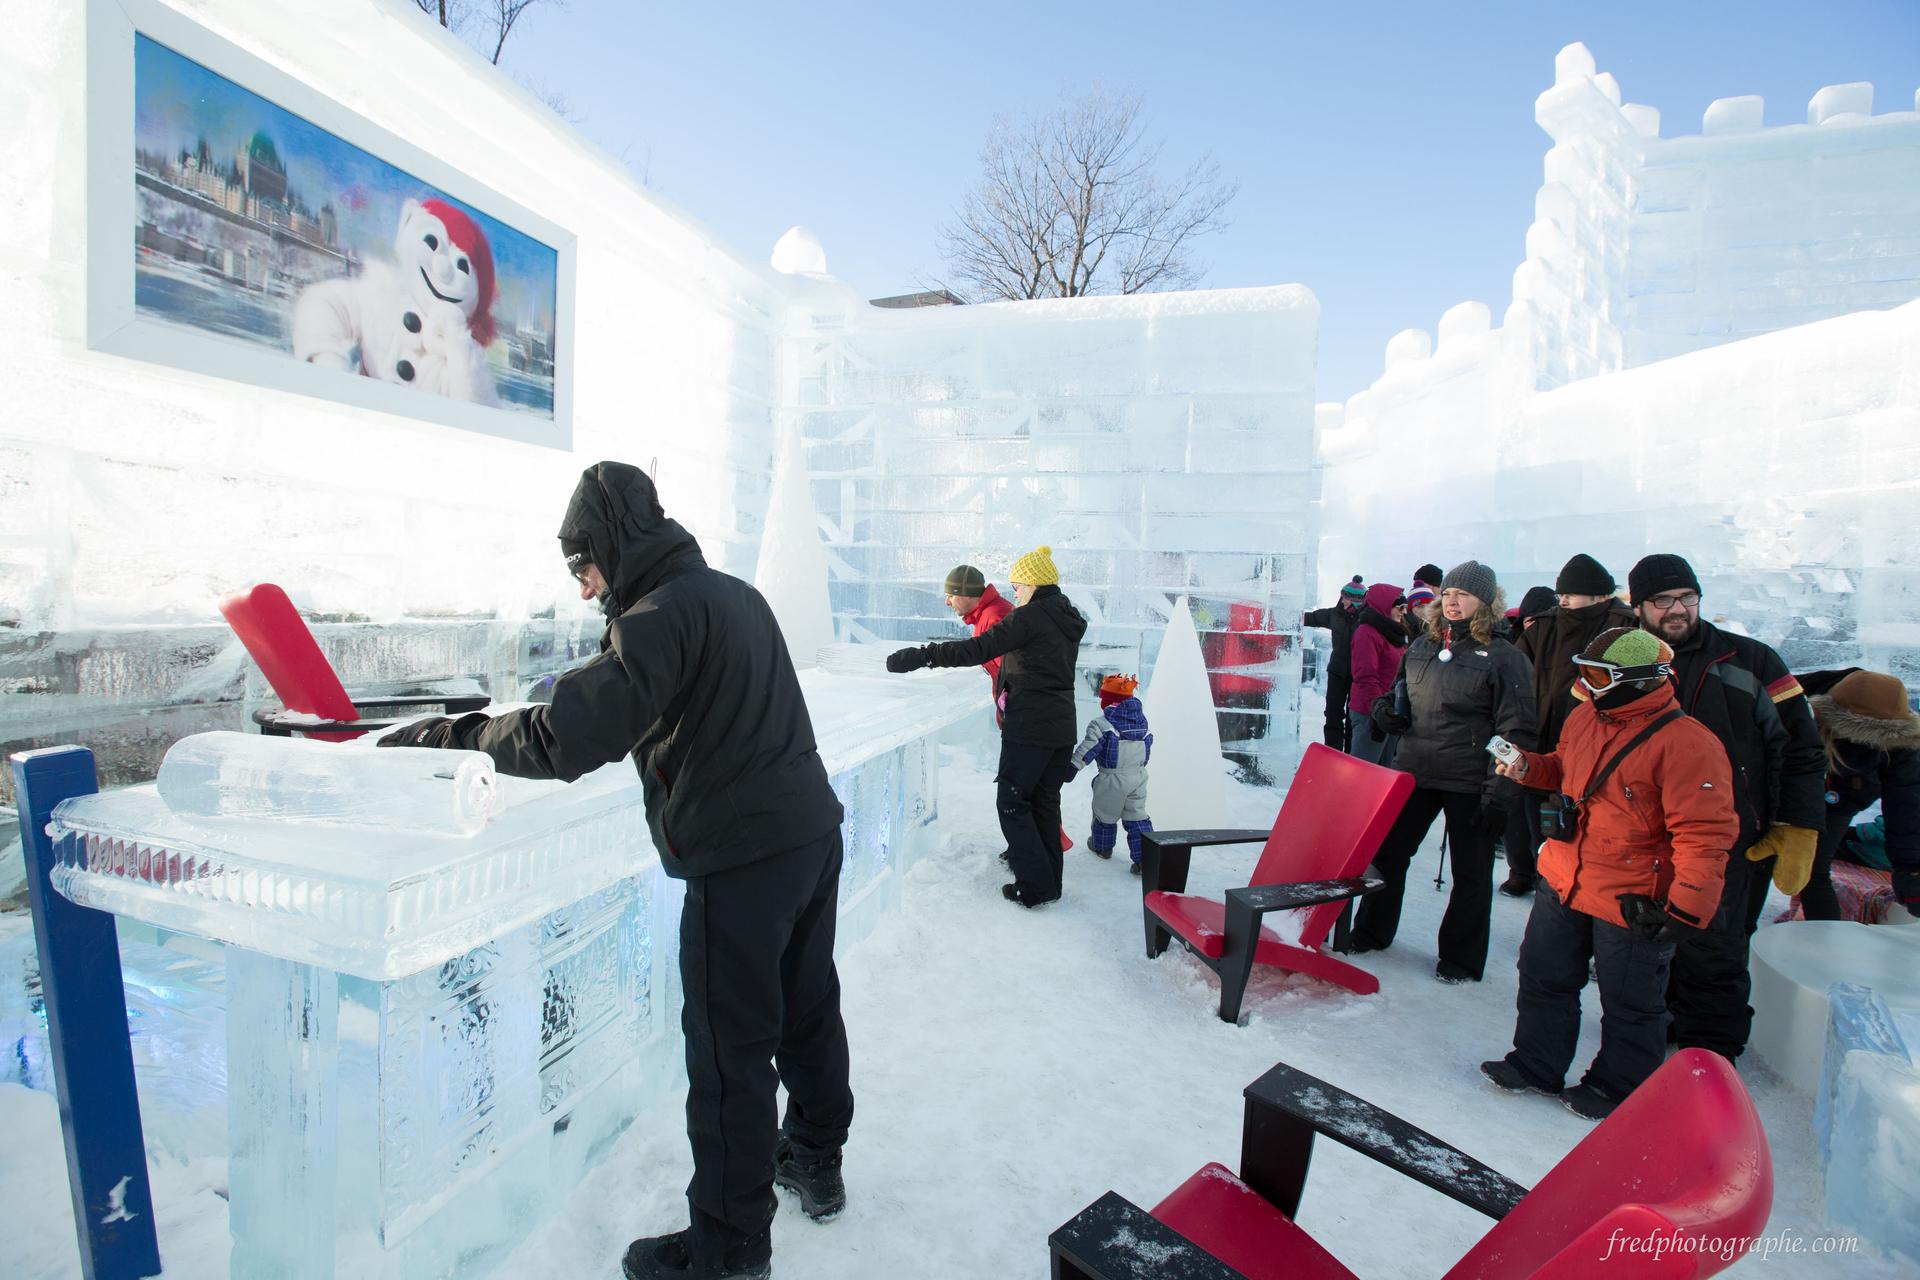 Québec City's hottest winter events